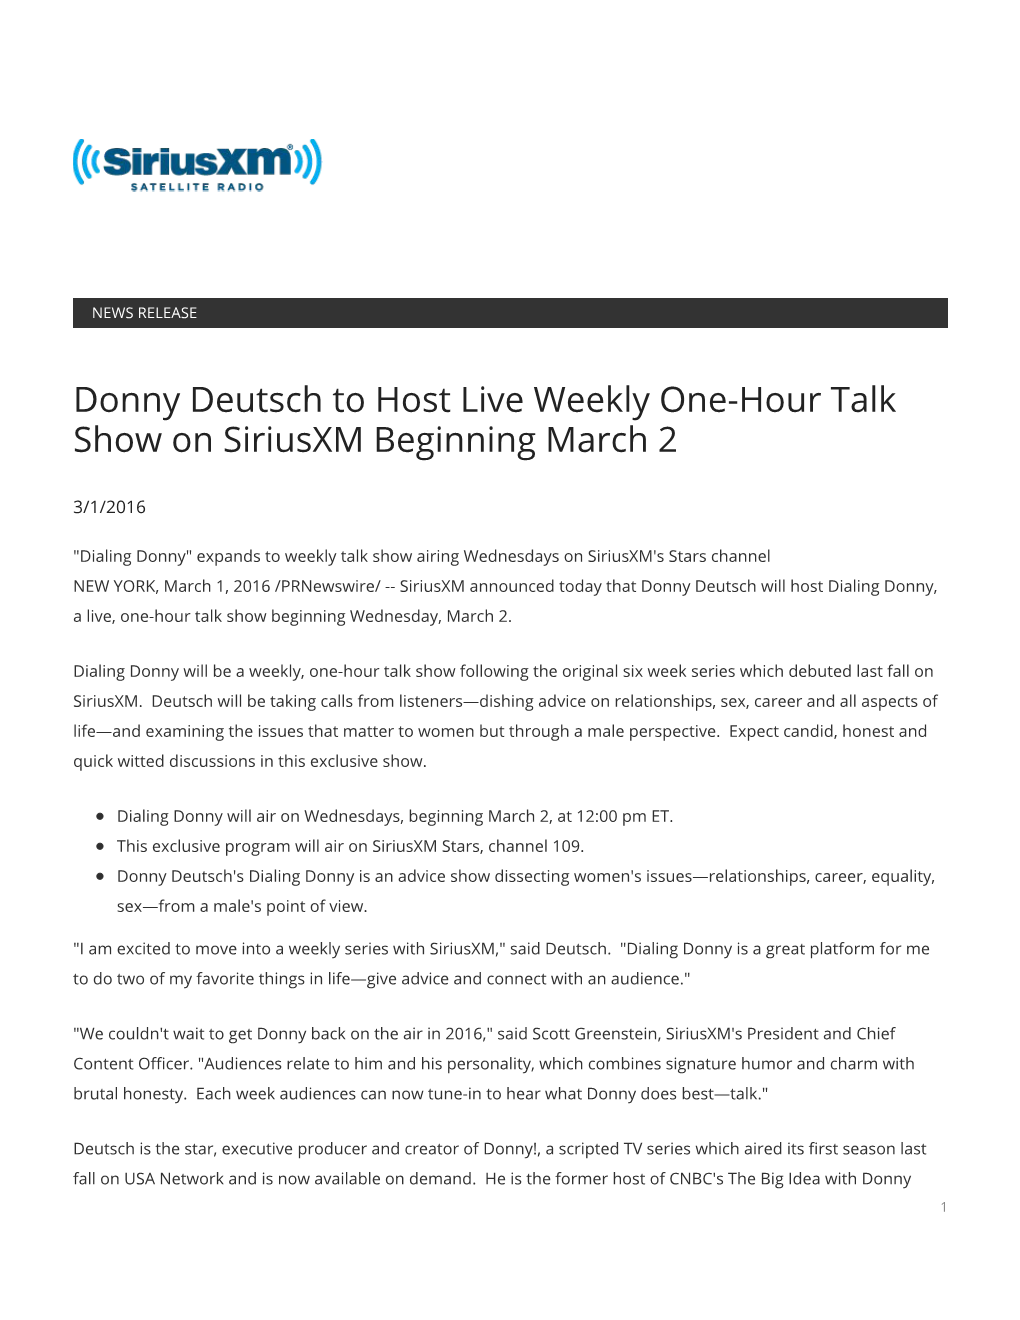 Donny Deutsch to Host Live Weekly One-Hour Talk Show on Siriusxm Beginning March 2